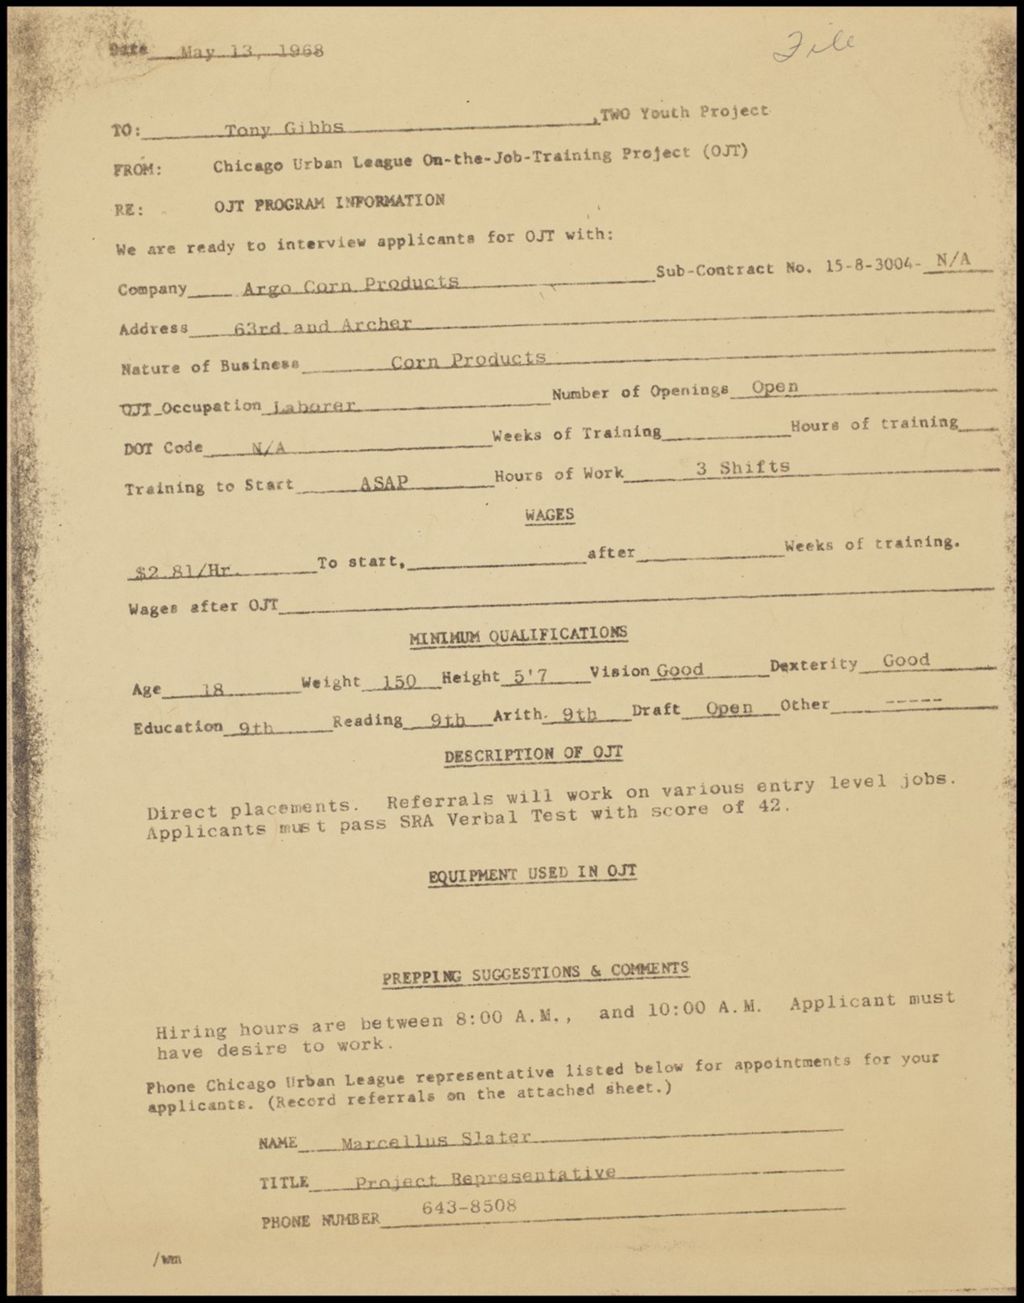 Job Order Forms, 1968 (Folder II-201)